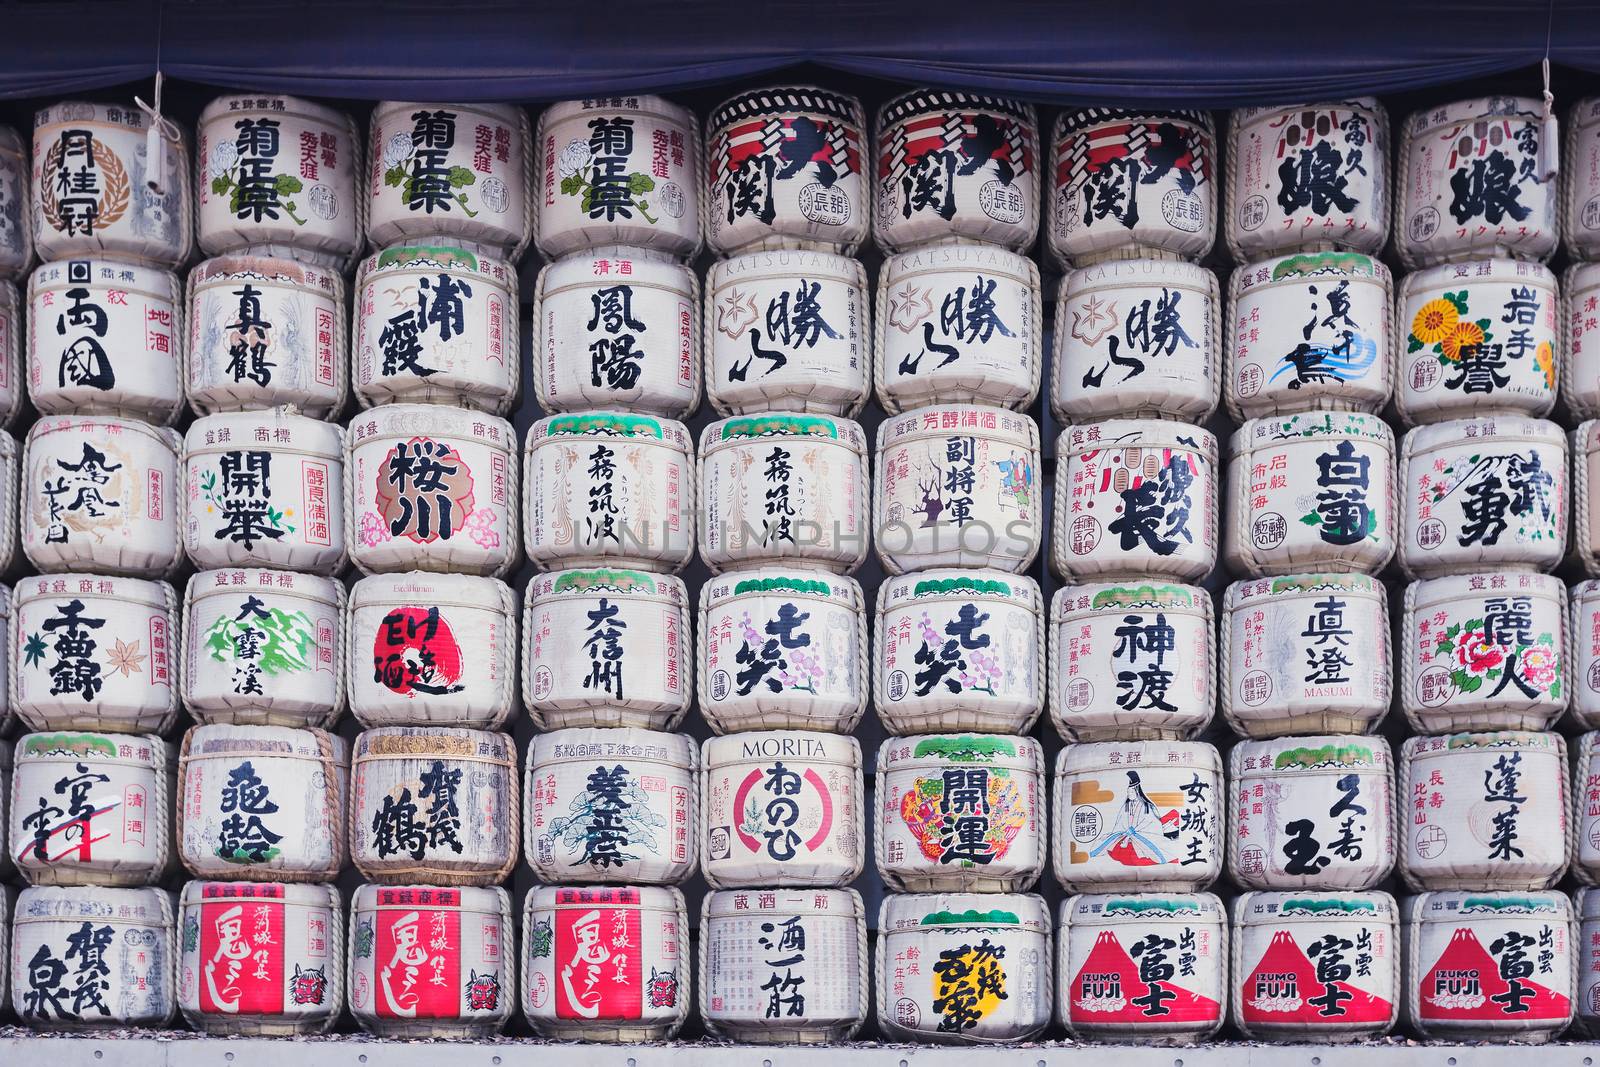 Barrels of sake donated by sake brewers from around Japan to the Meiji Jingu Shrine, Tokyo, Japan by zhu_zhu